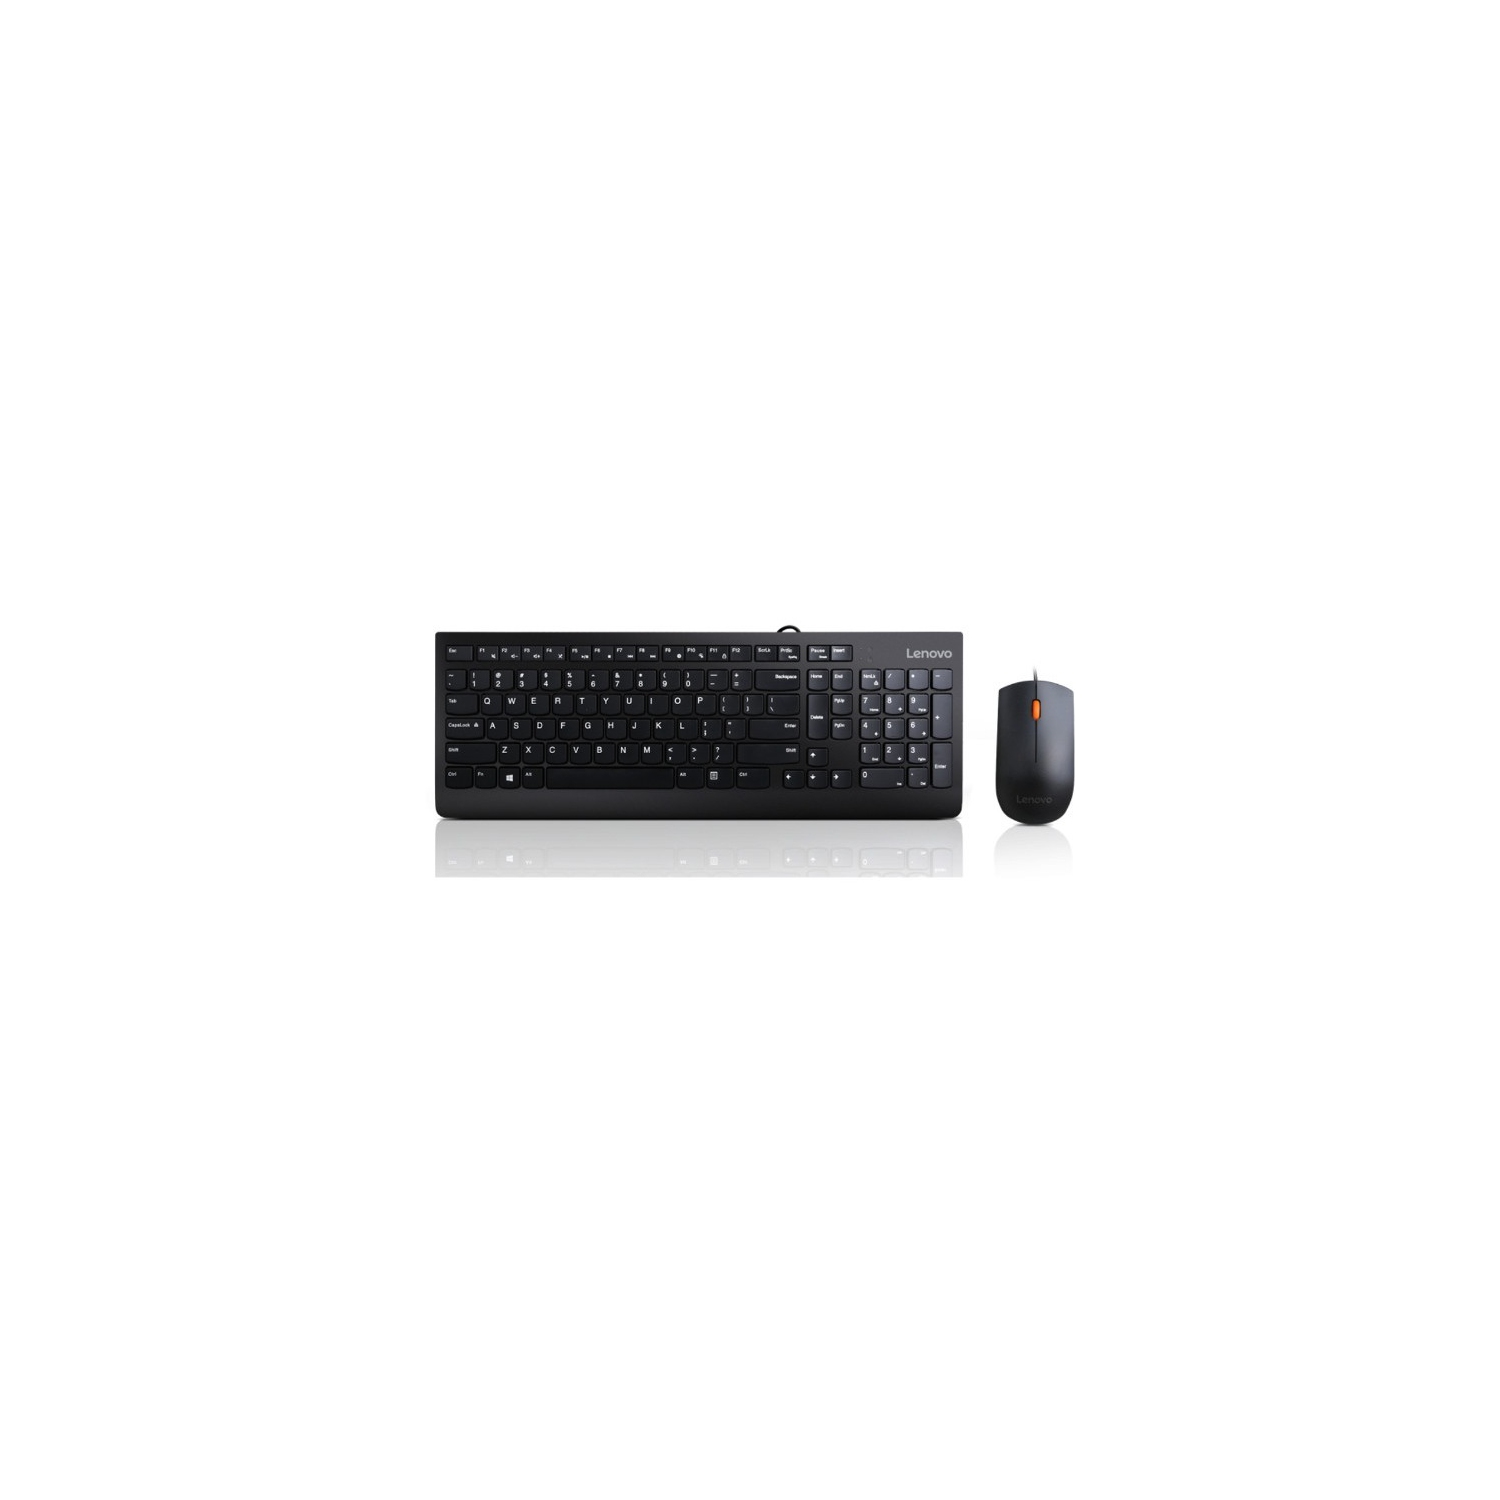 Lenovo 300 USB Combo Keyboard & Mouse - US English (103P) GX30M39606